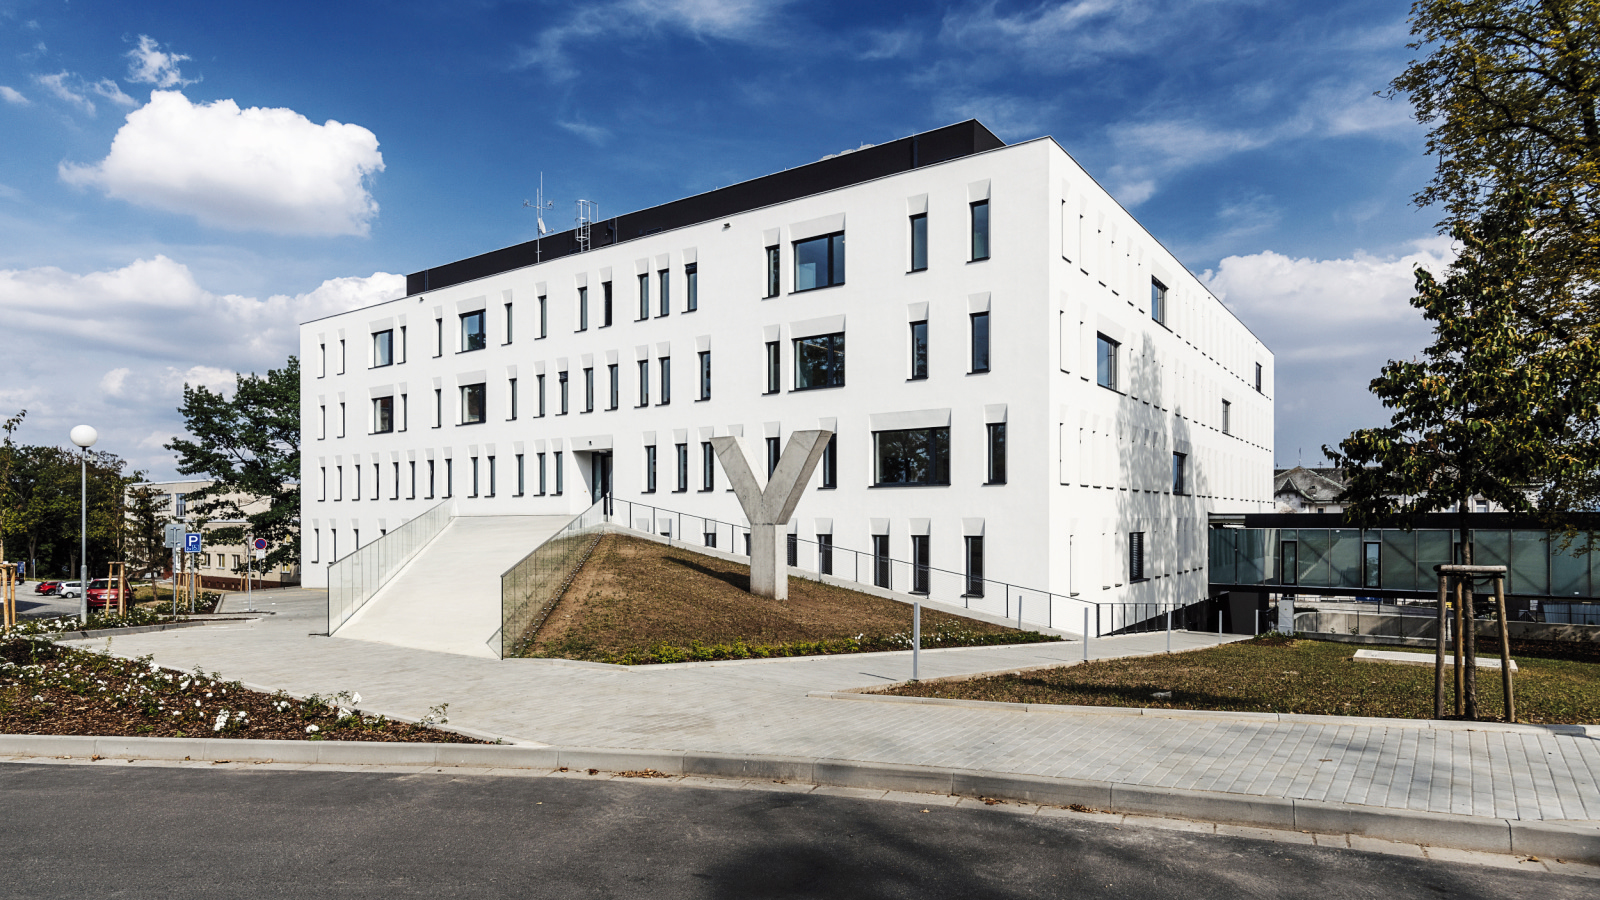 Obr. 6 II. interní klinika a geriatrie v Olomouci, 
autor: Adam Rujbr Architects